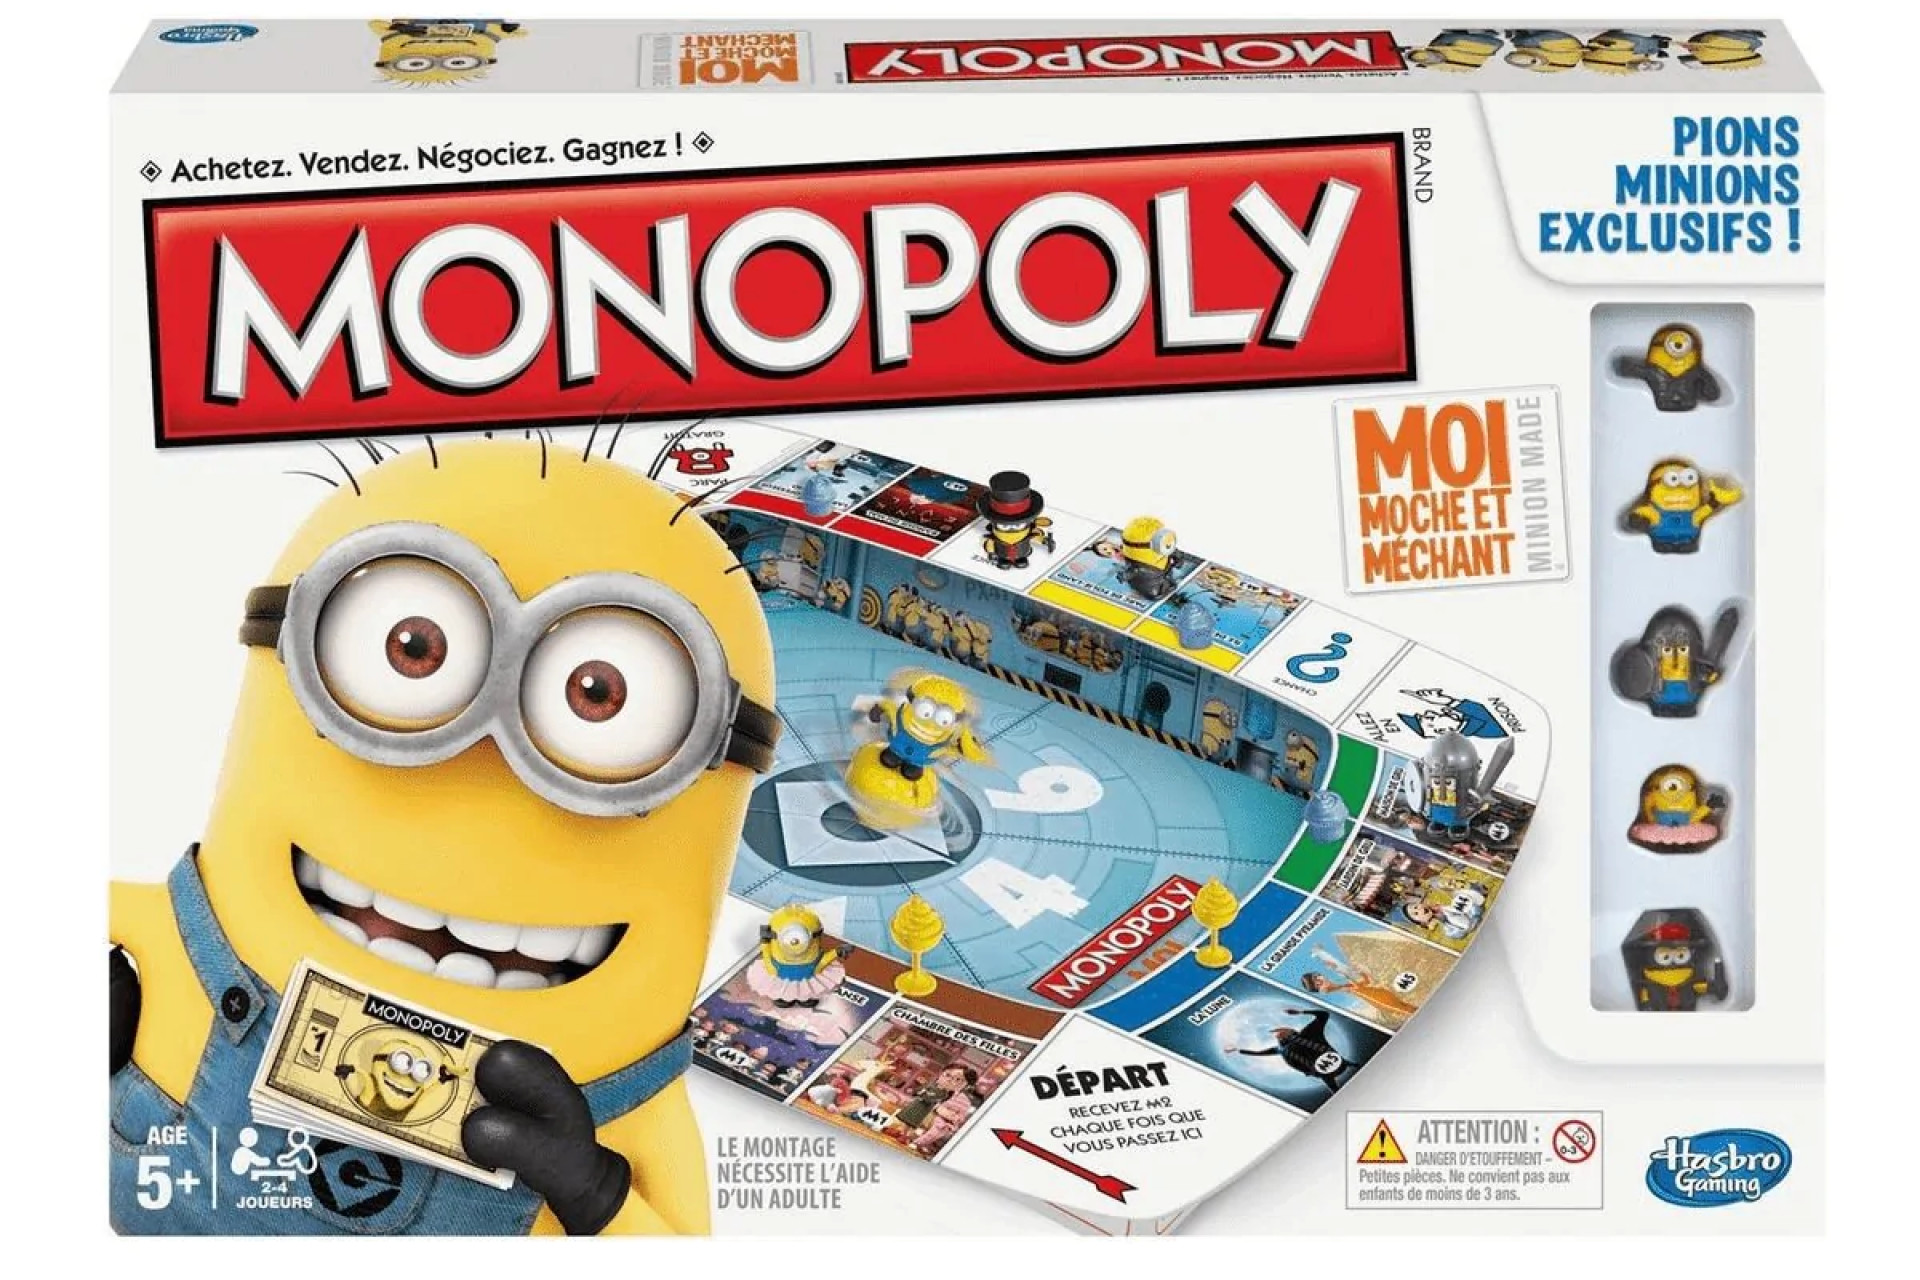 Acheter Hasbro Monopoly Minions